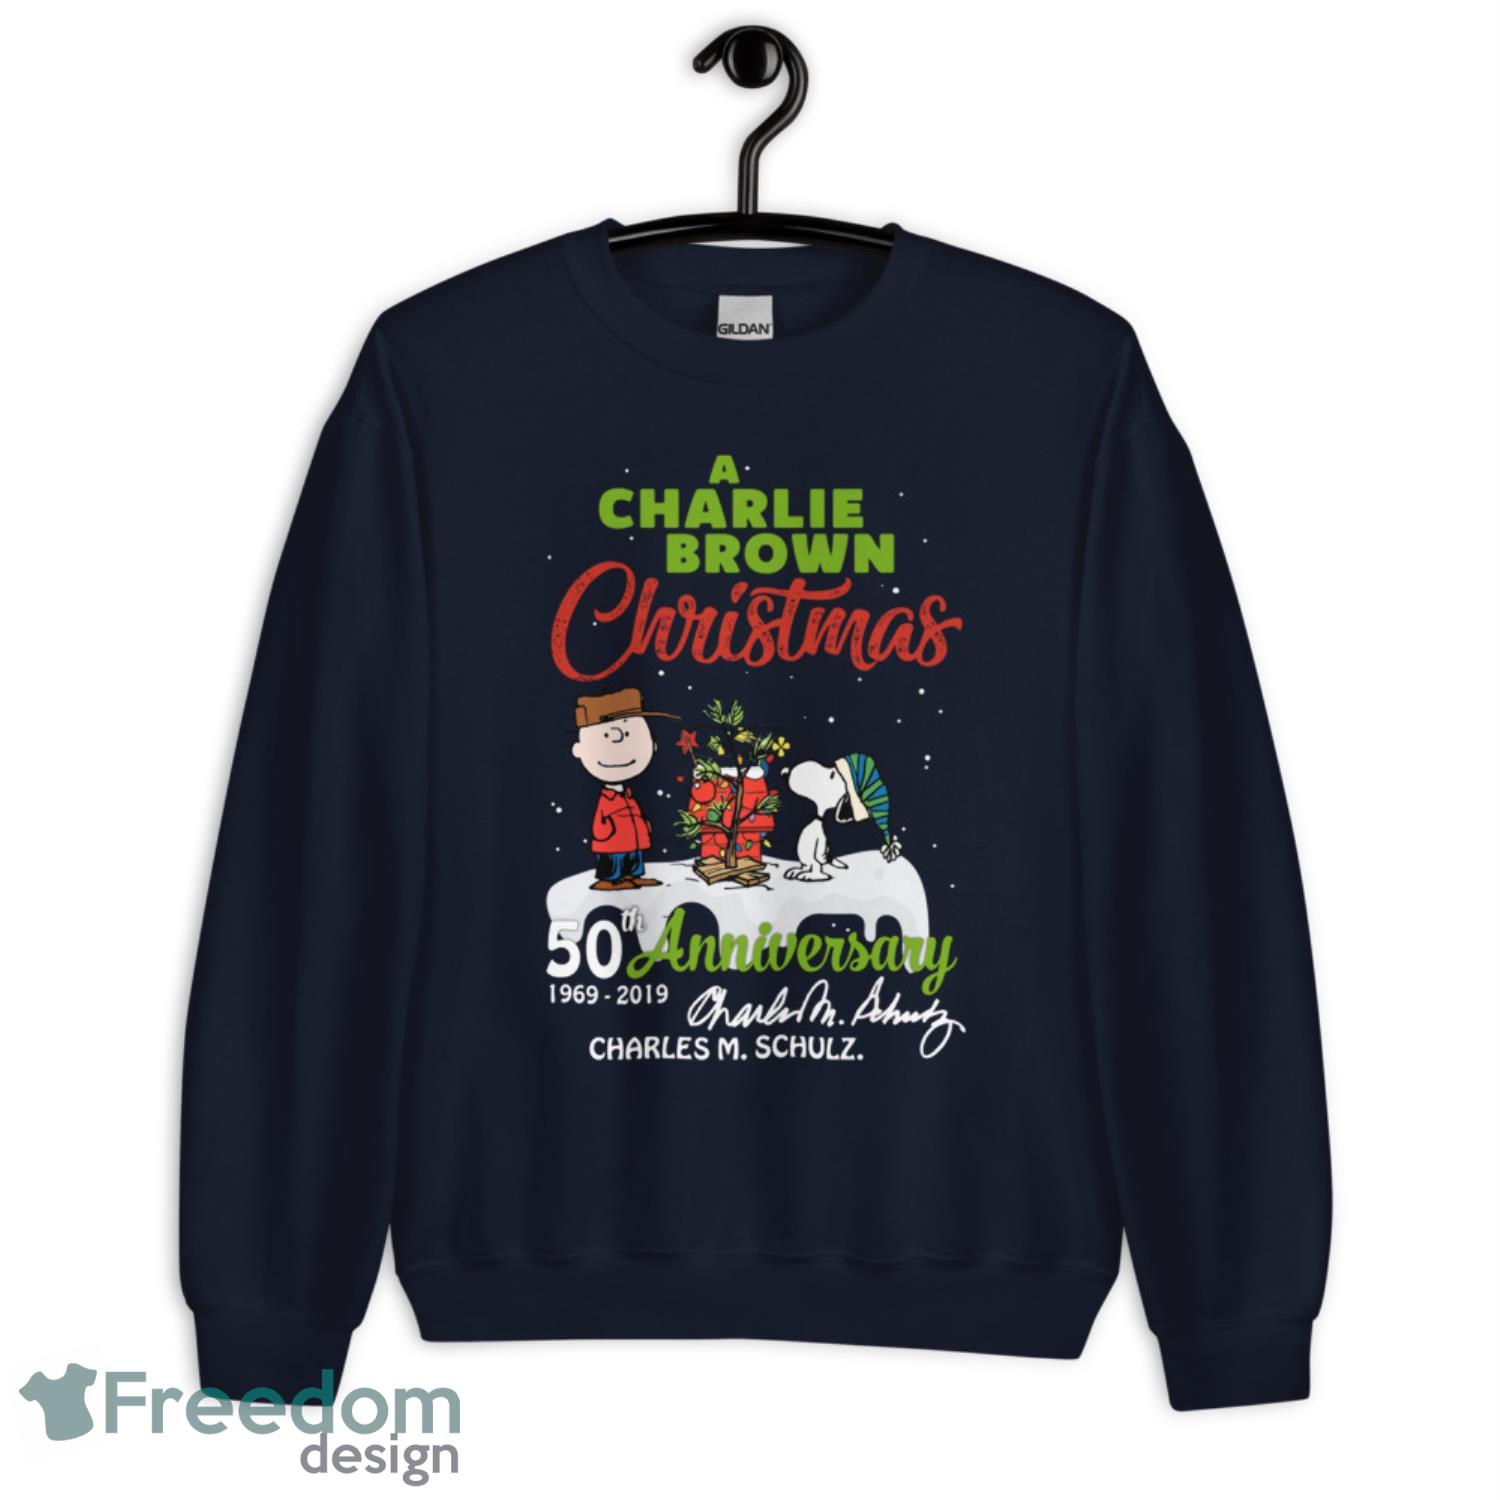 A Charlie Brown Christmas 50th Anniversary 1969 2019 Signature Shirt LV - G185 Crewneck Sweatshirt-1